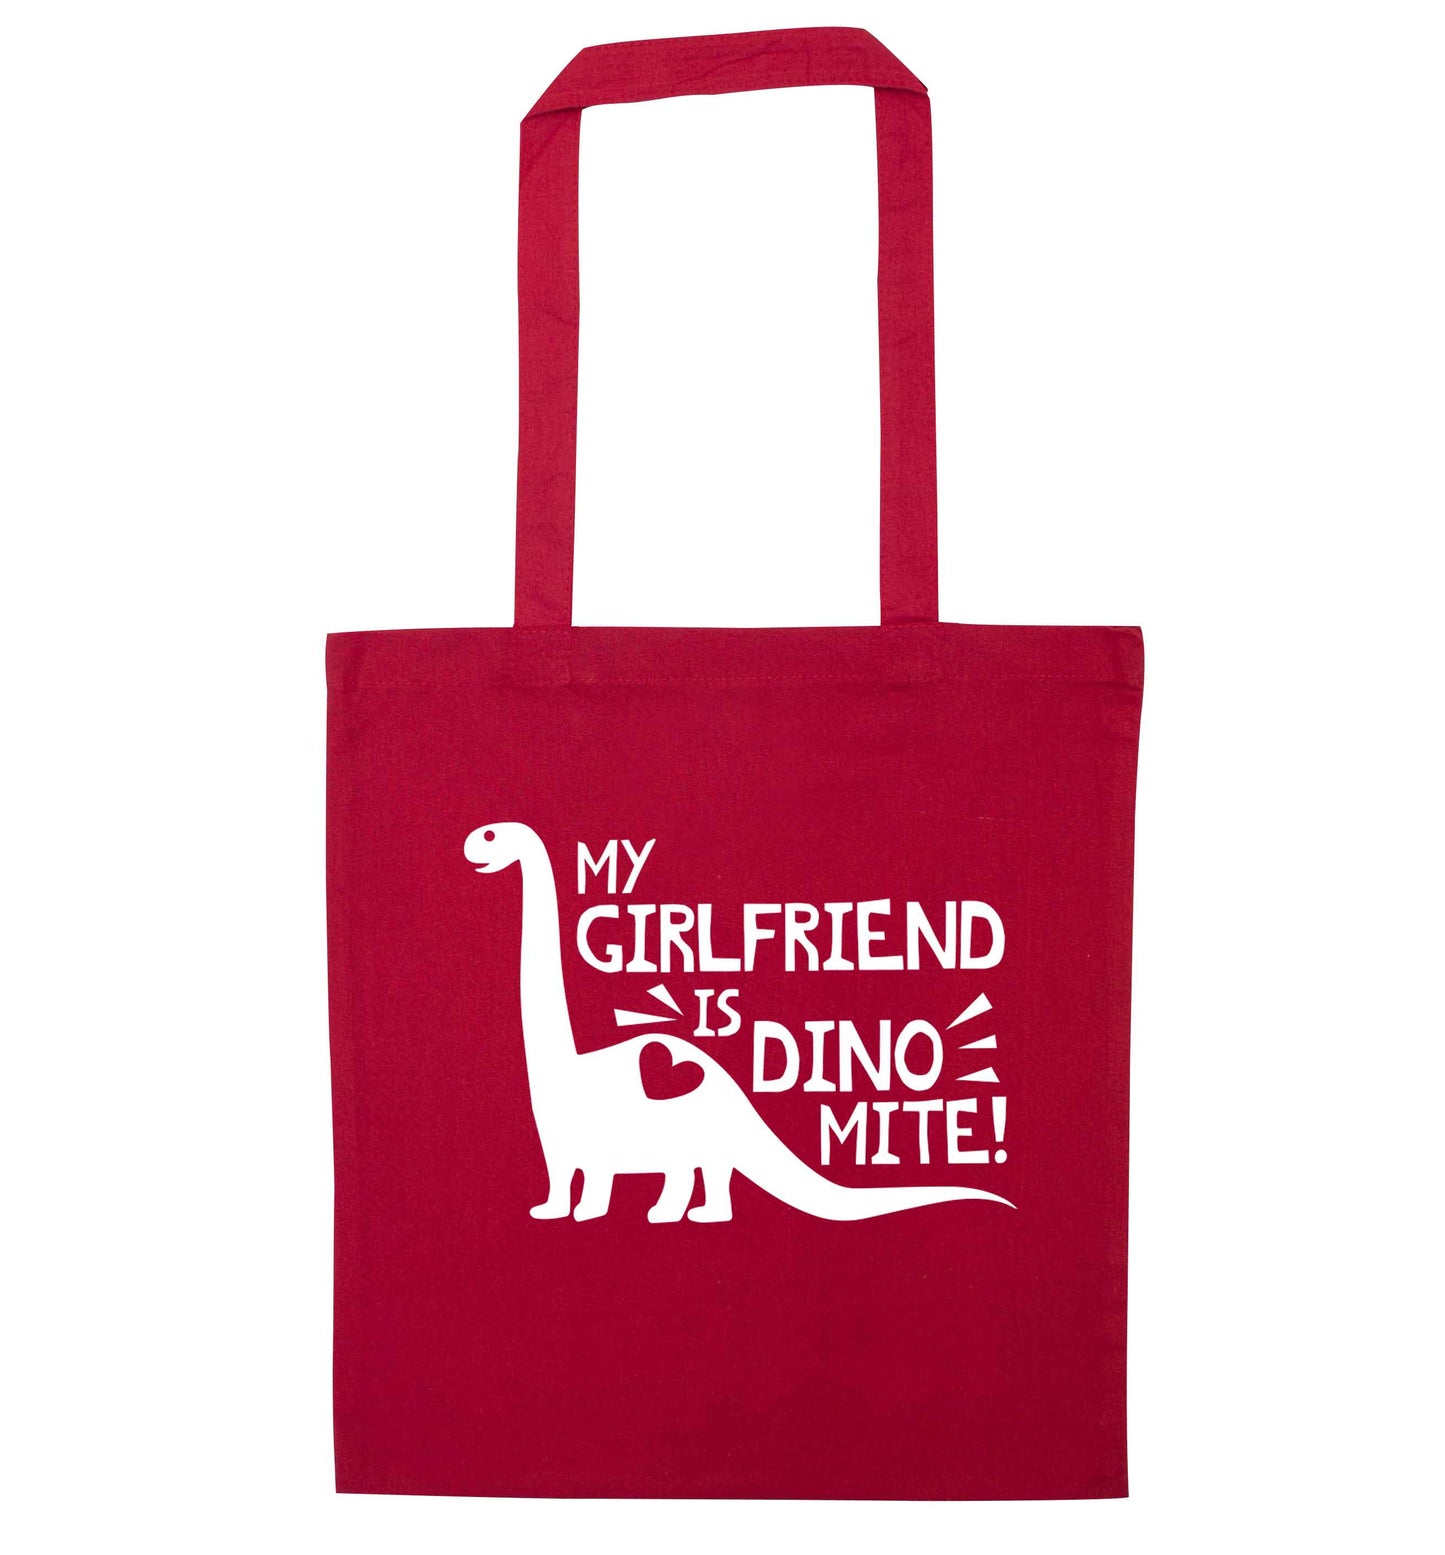 My girlfriend is dinomite! red tote bag